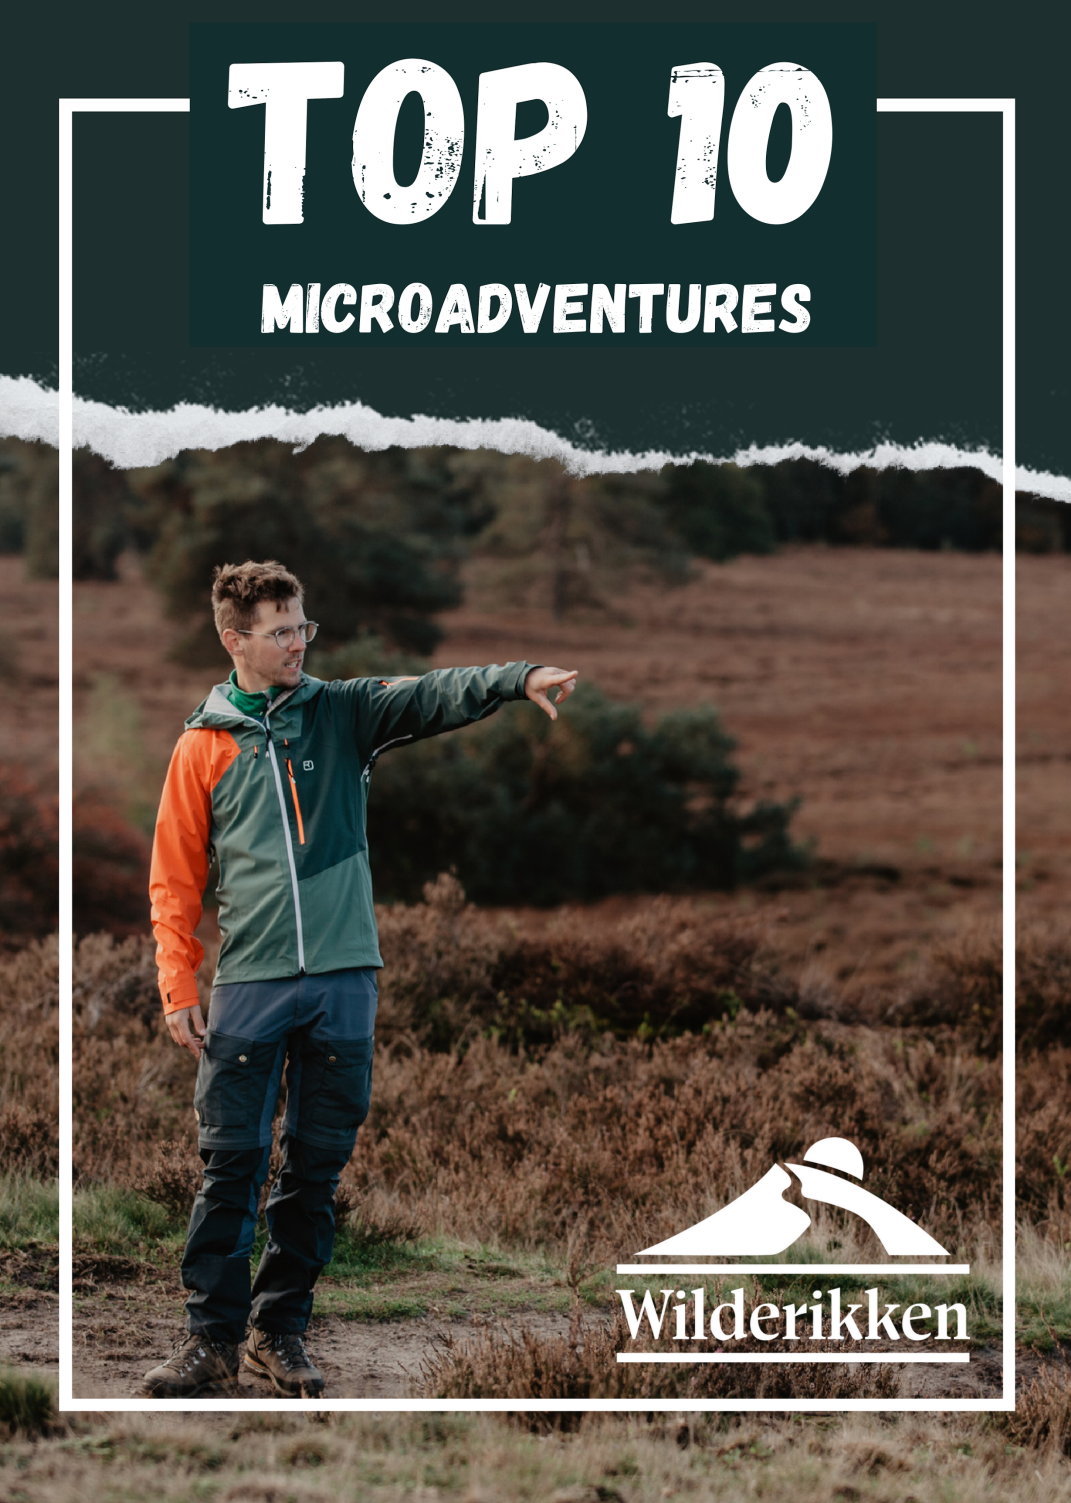 Top 10 Microadventures